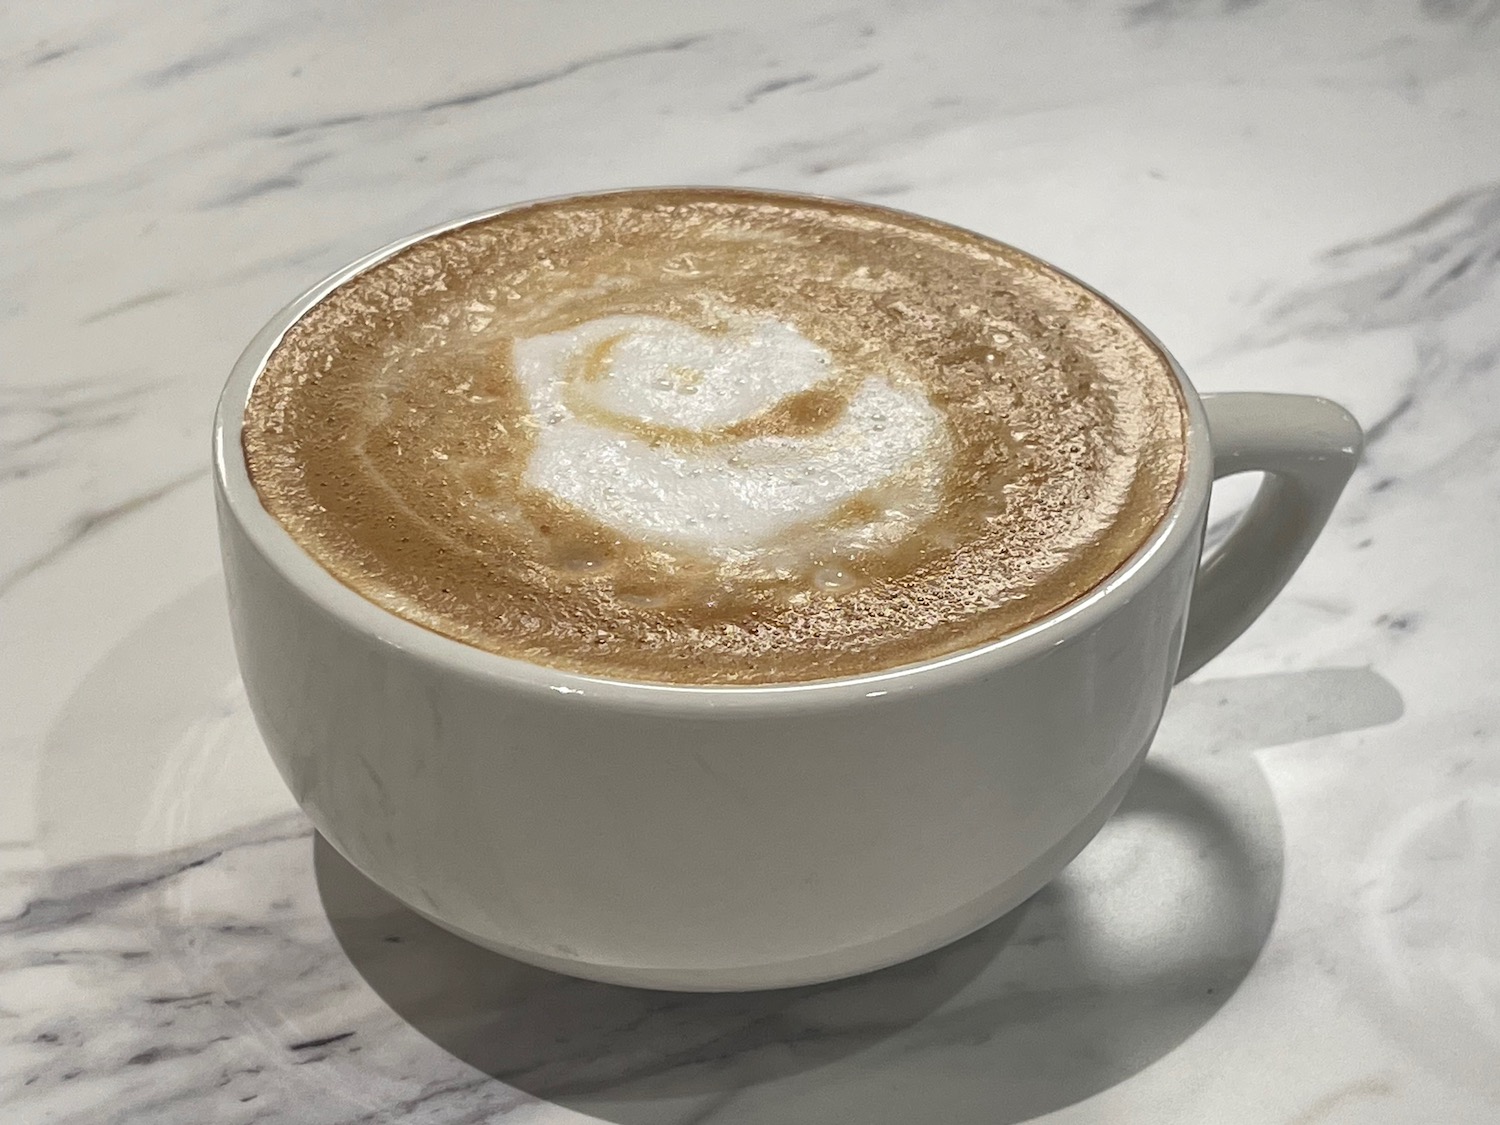 a cup of coffee with a heart shape foam in it